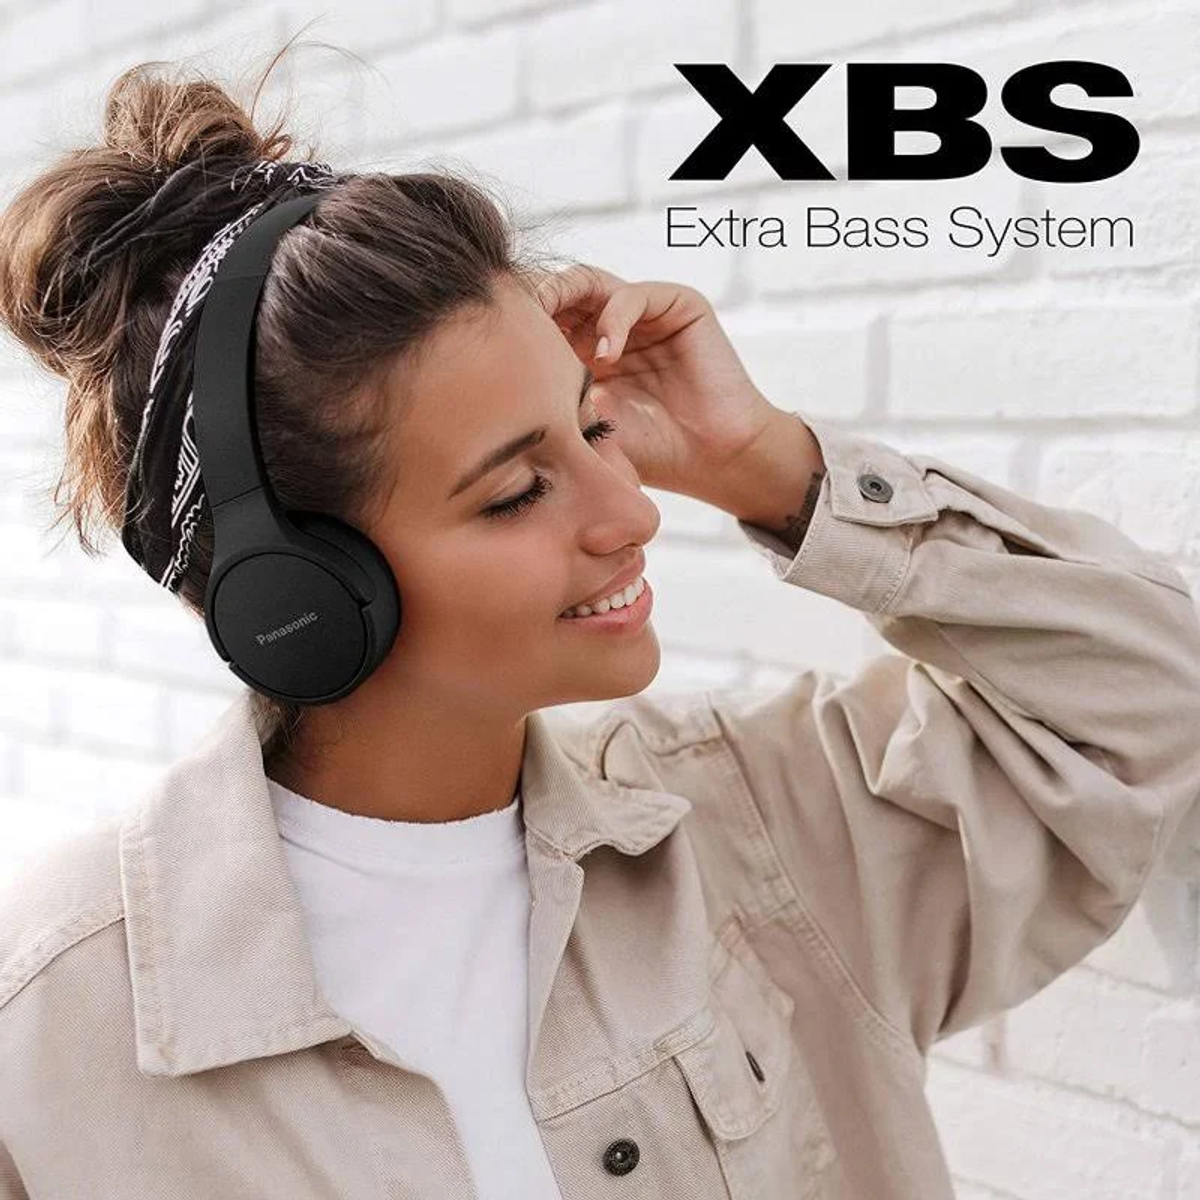 PANASONIC RB-HF420BE-K Kopfhörer Bluetooth On-ear Schwarz ON-EAR